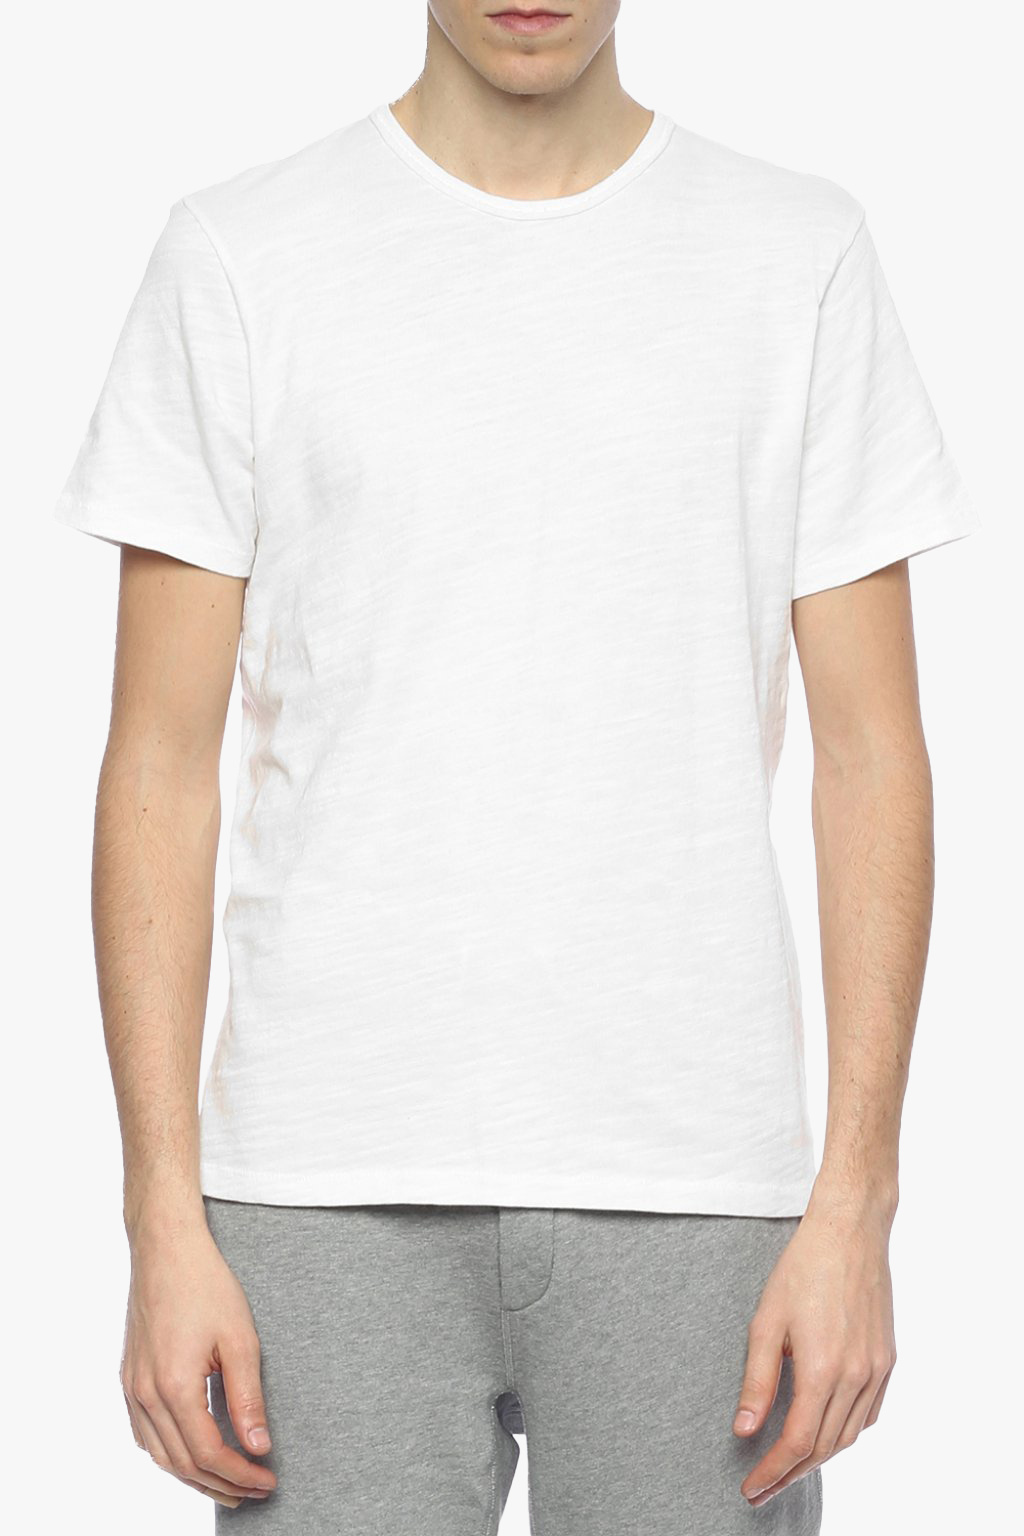 GenesinlifeShops Chad - shirt Rag & Bone - White Crewneck T - T-shirt with  elastic on the sleeves and hem